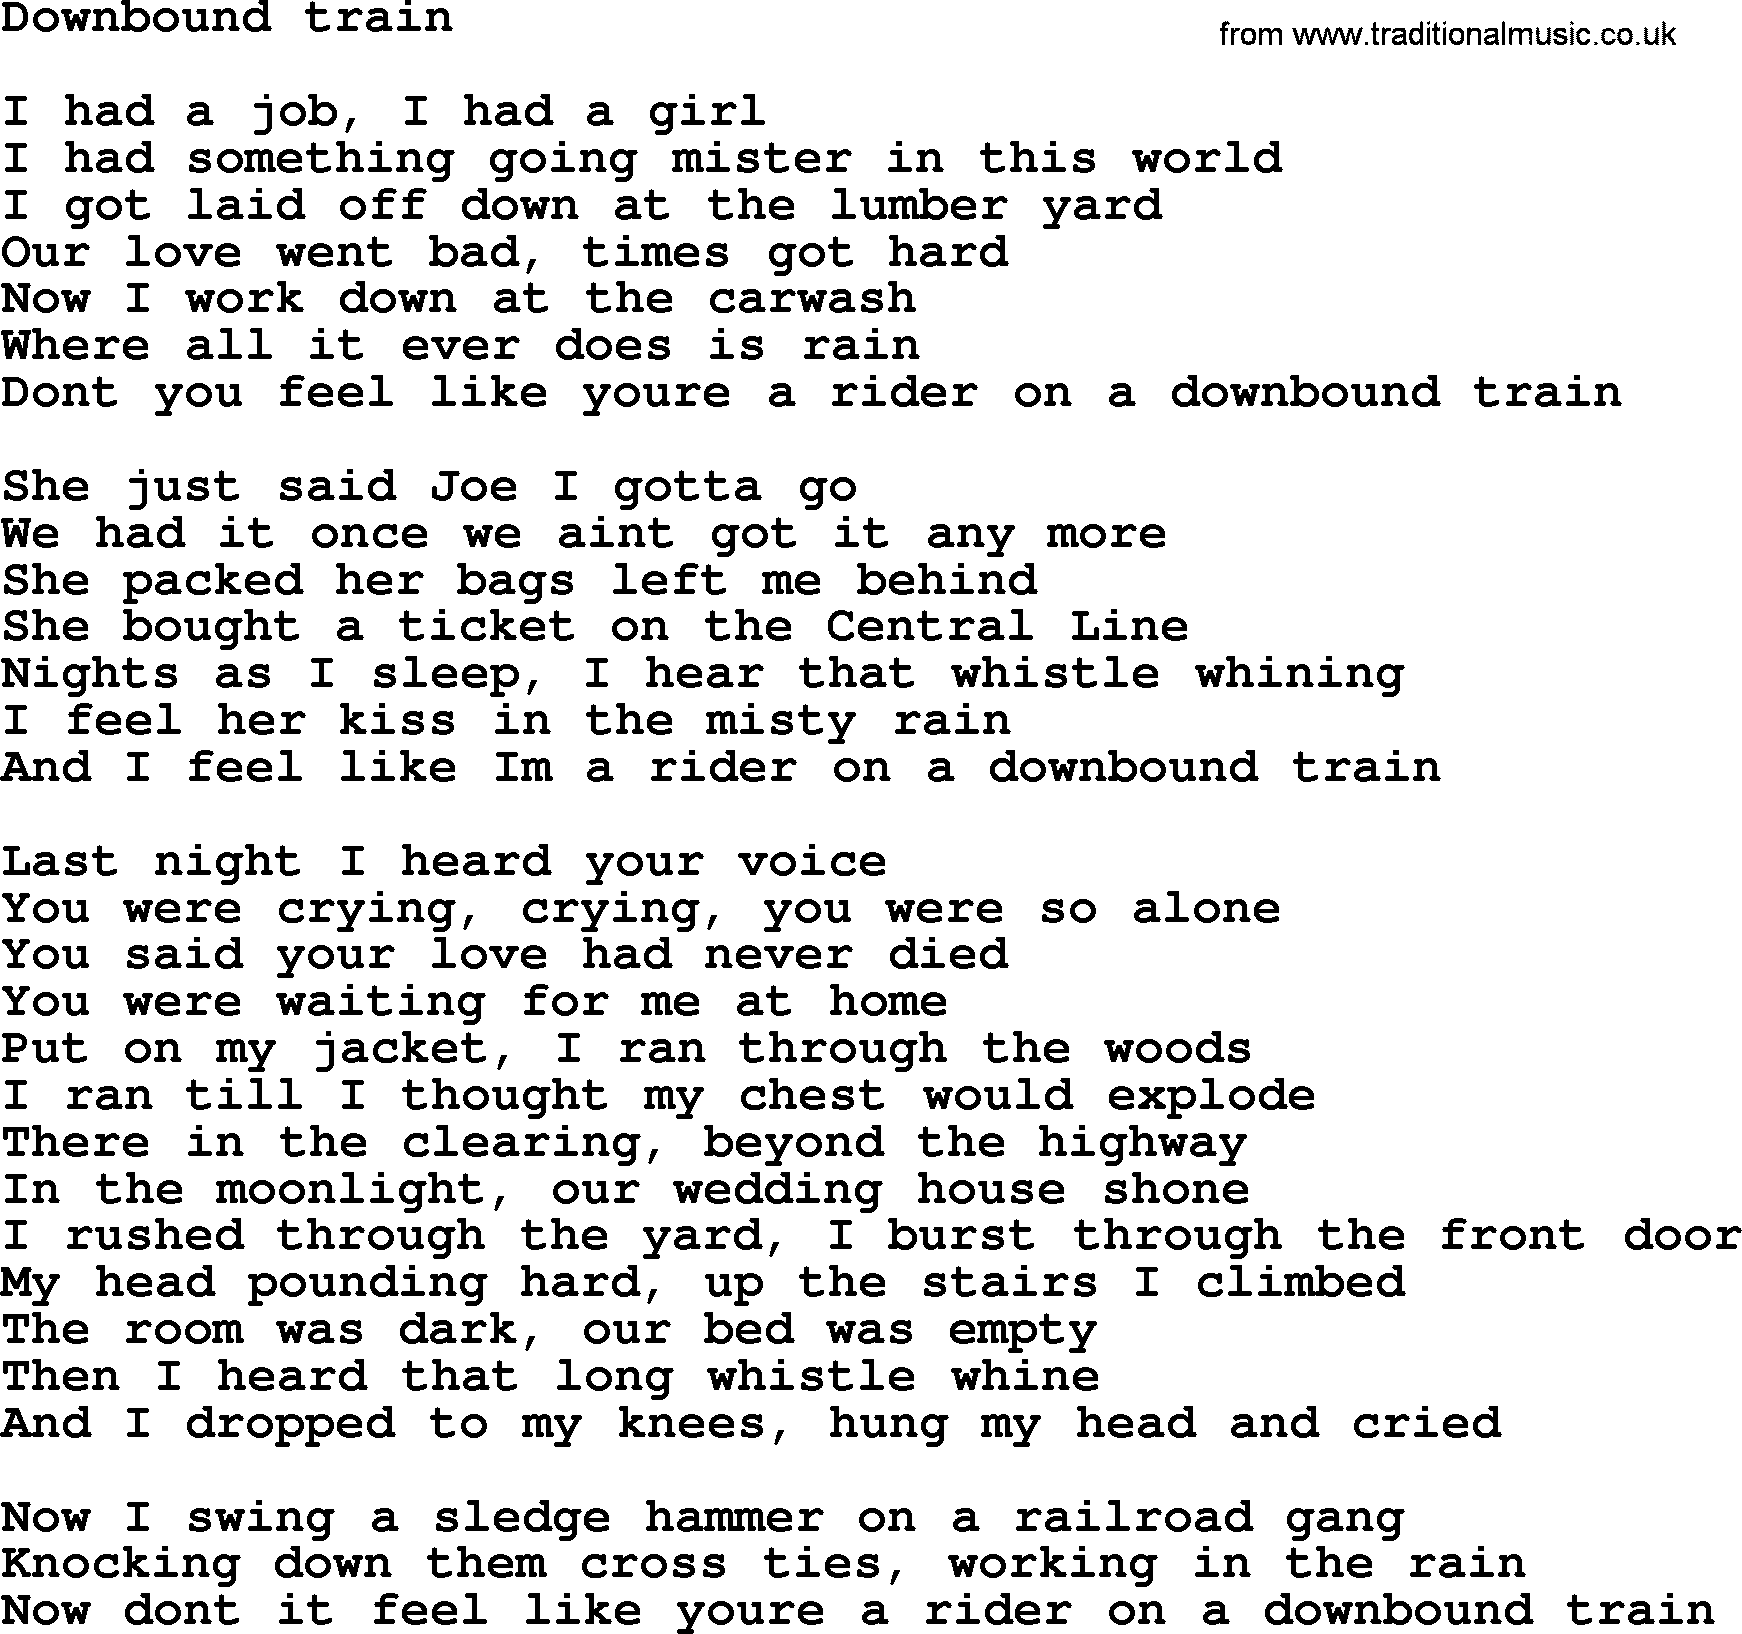 Bruce Springsteen song: Downbound Train lyrics